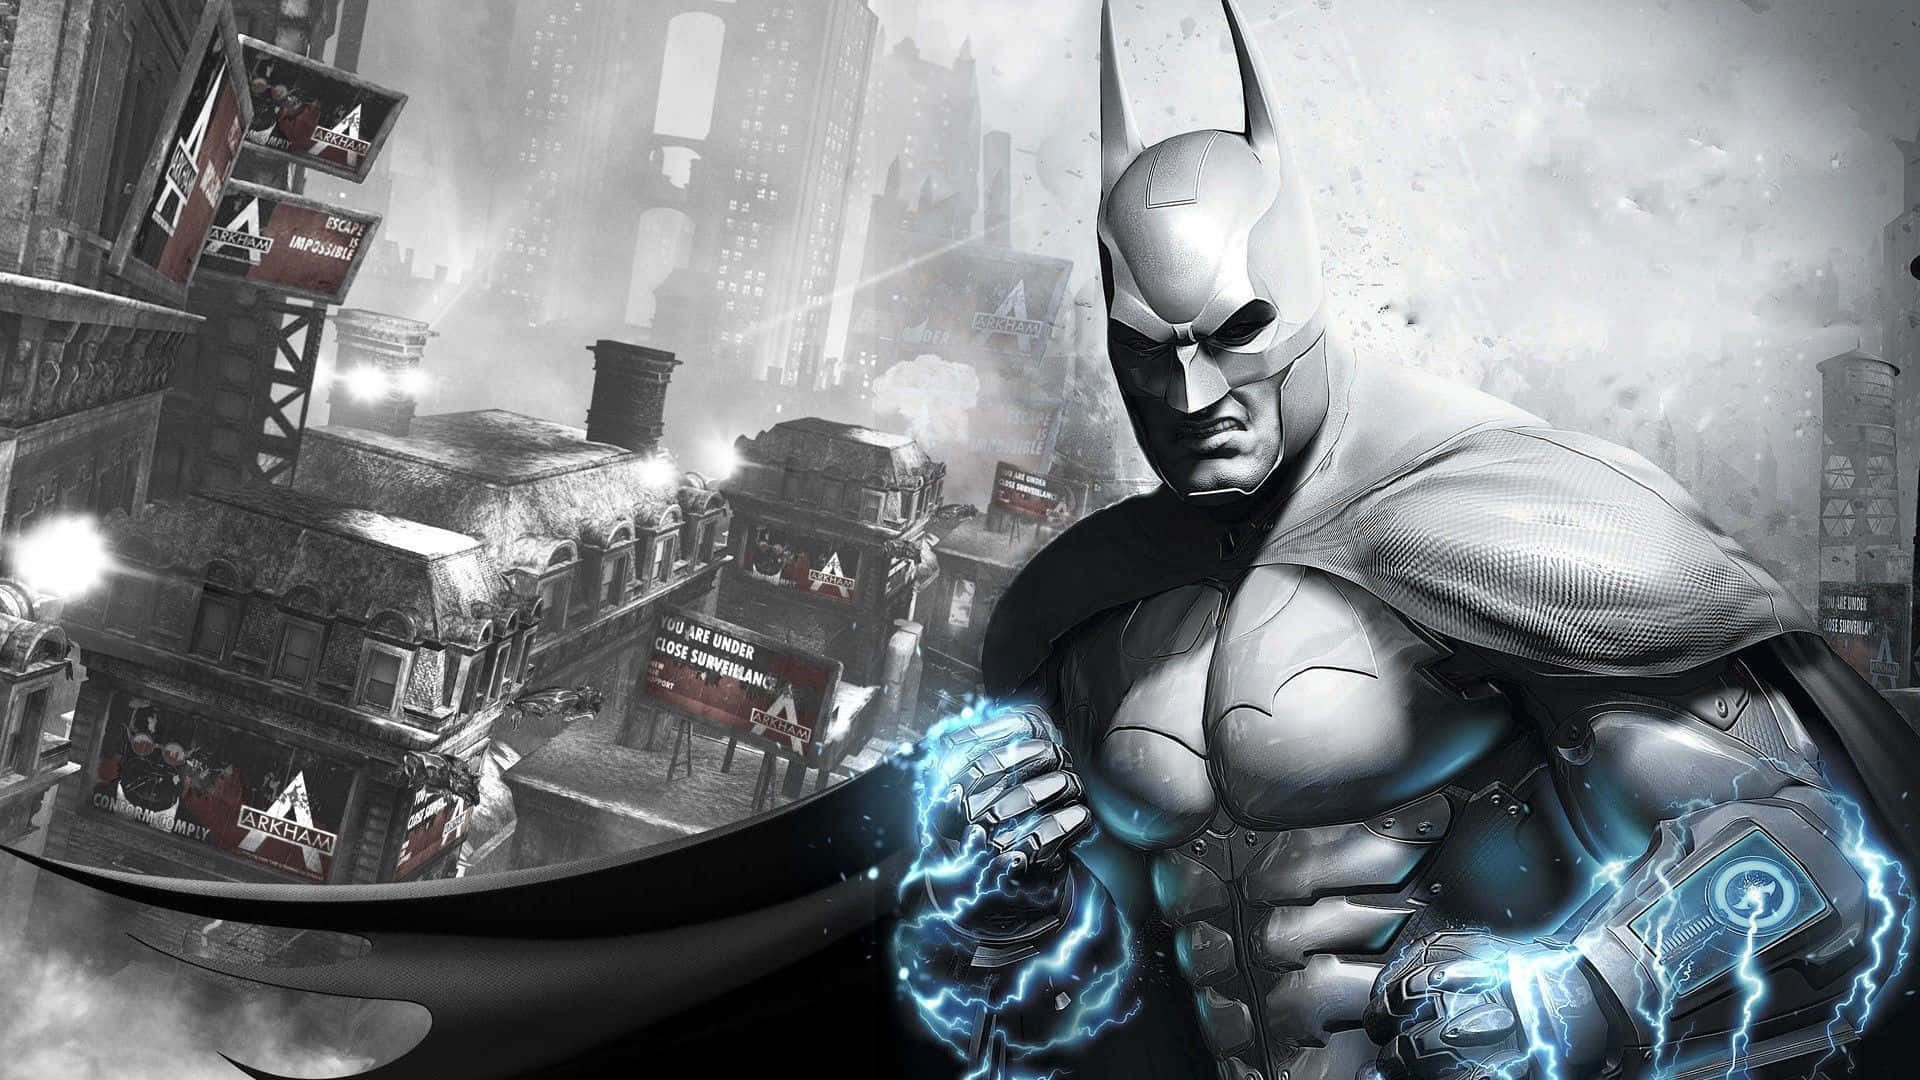 Esplorale Parti Più Oscure Di Gotham In Batman Arkham Asylum Sfondo